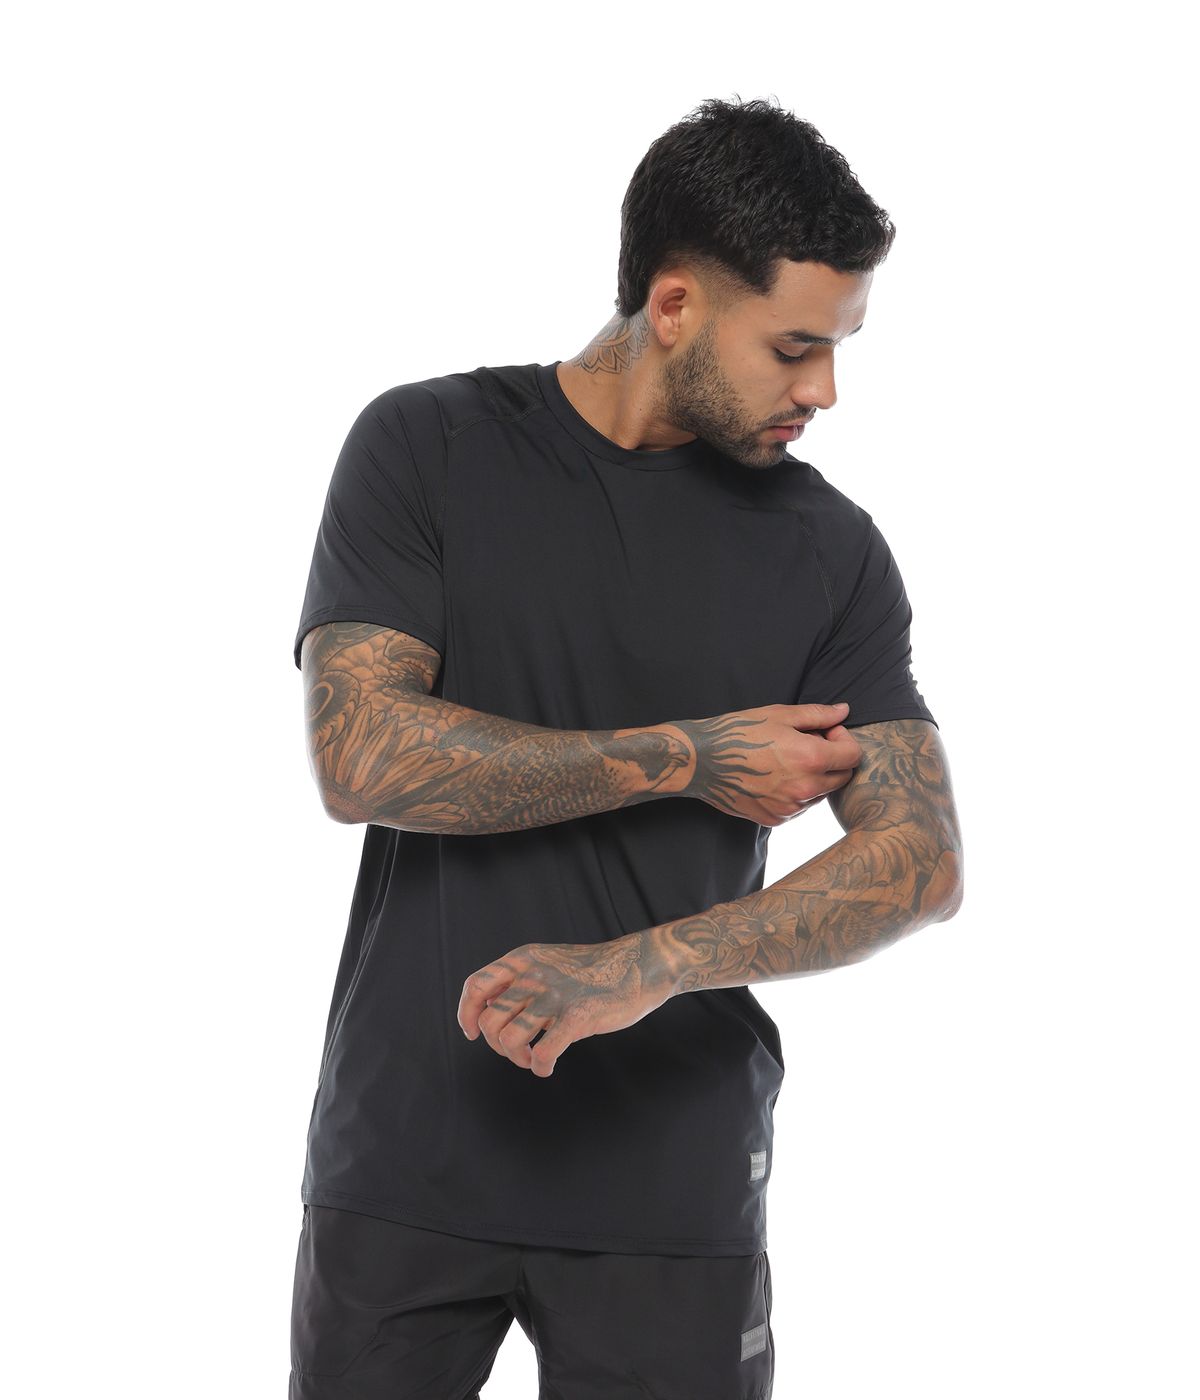 Bienvenido virtud Definir Camiseta deportiva hombre, color negro - racketball movil